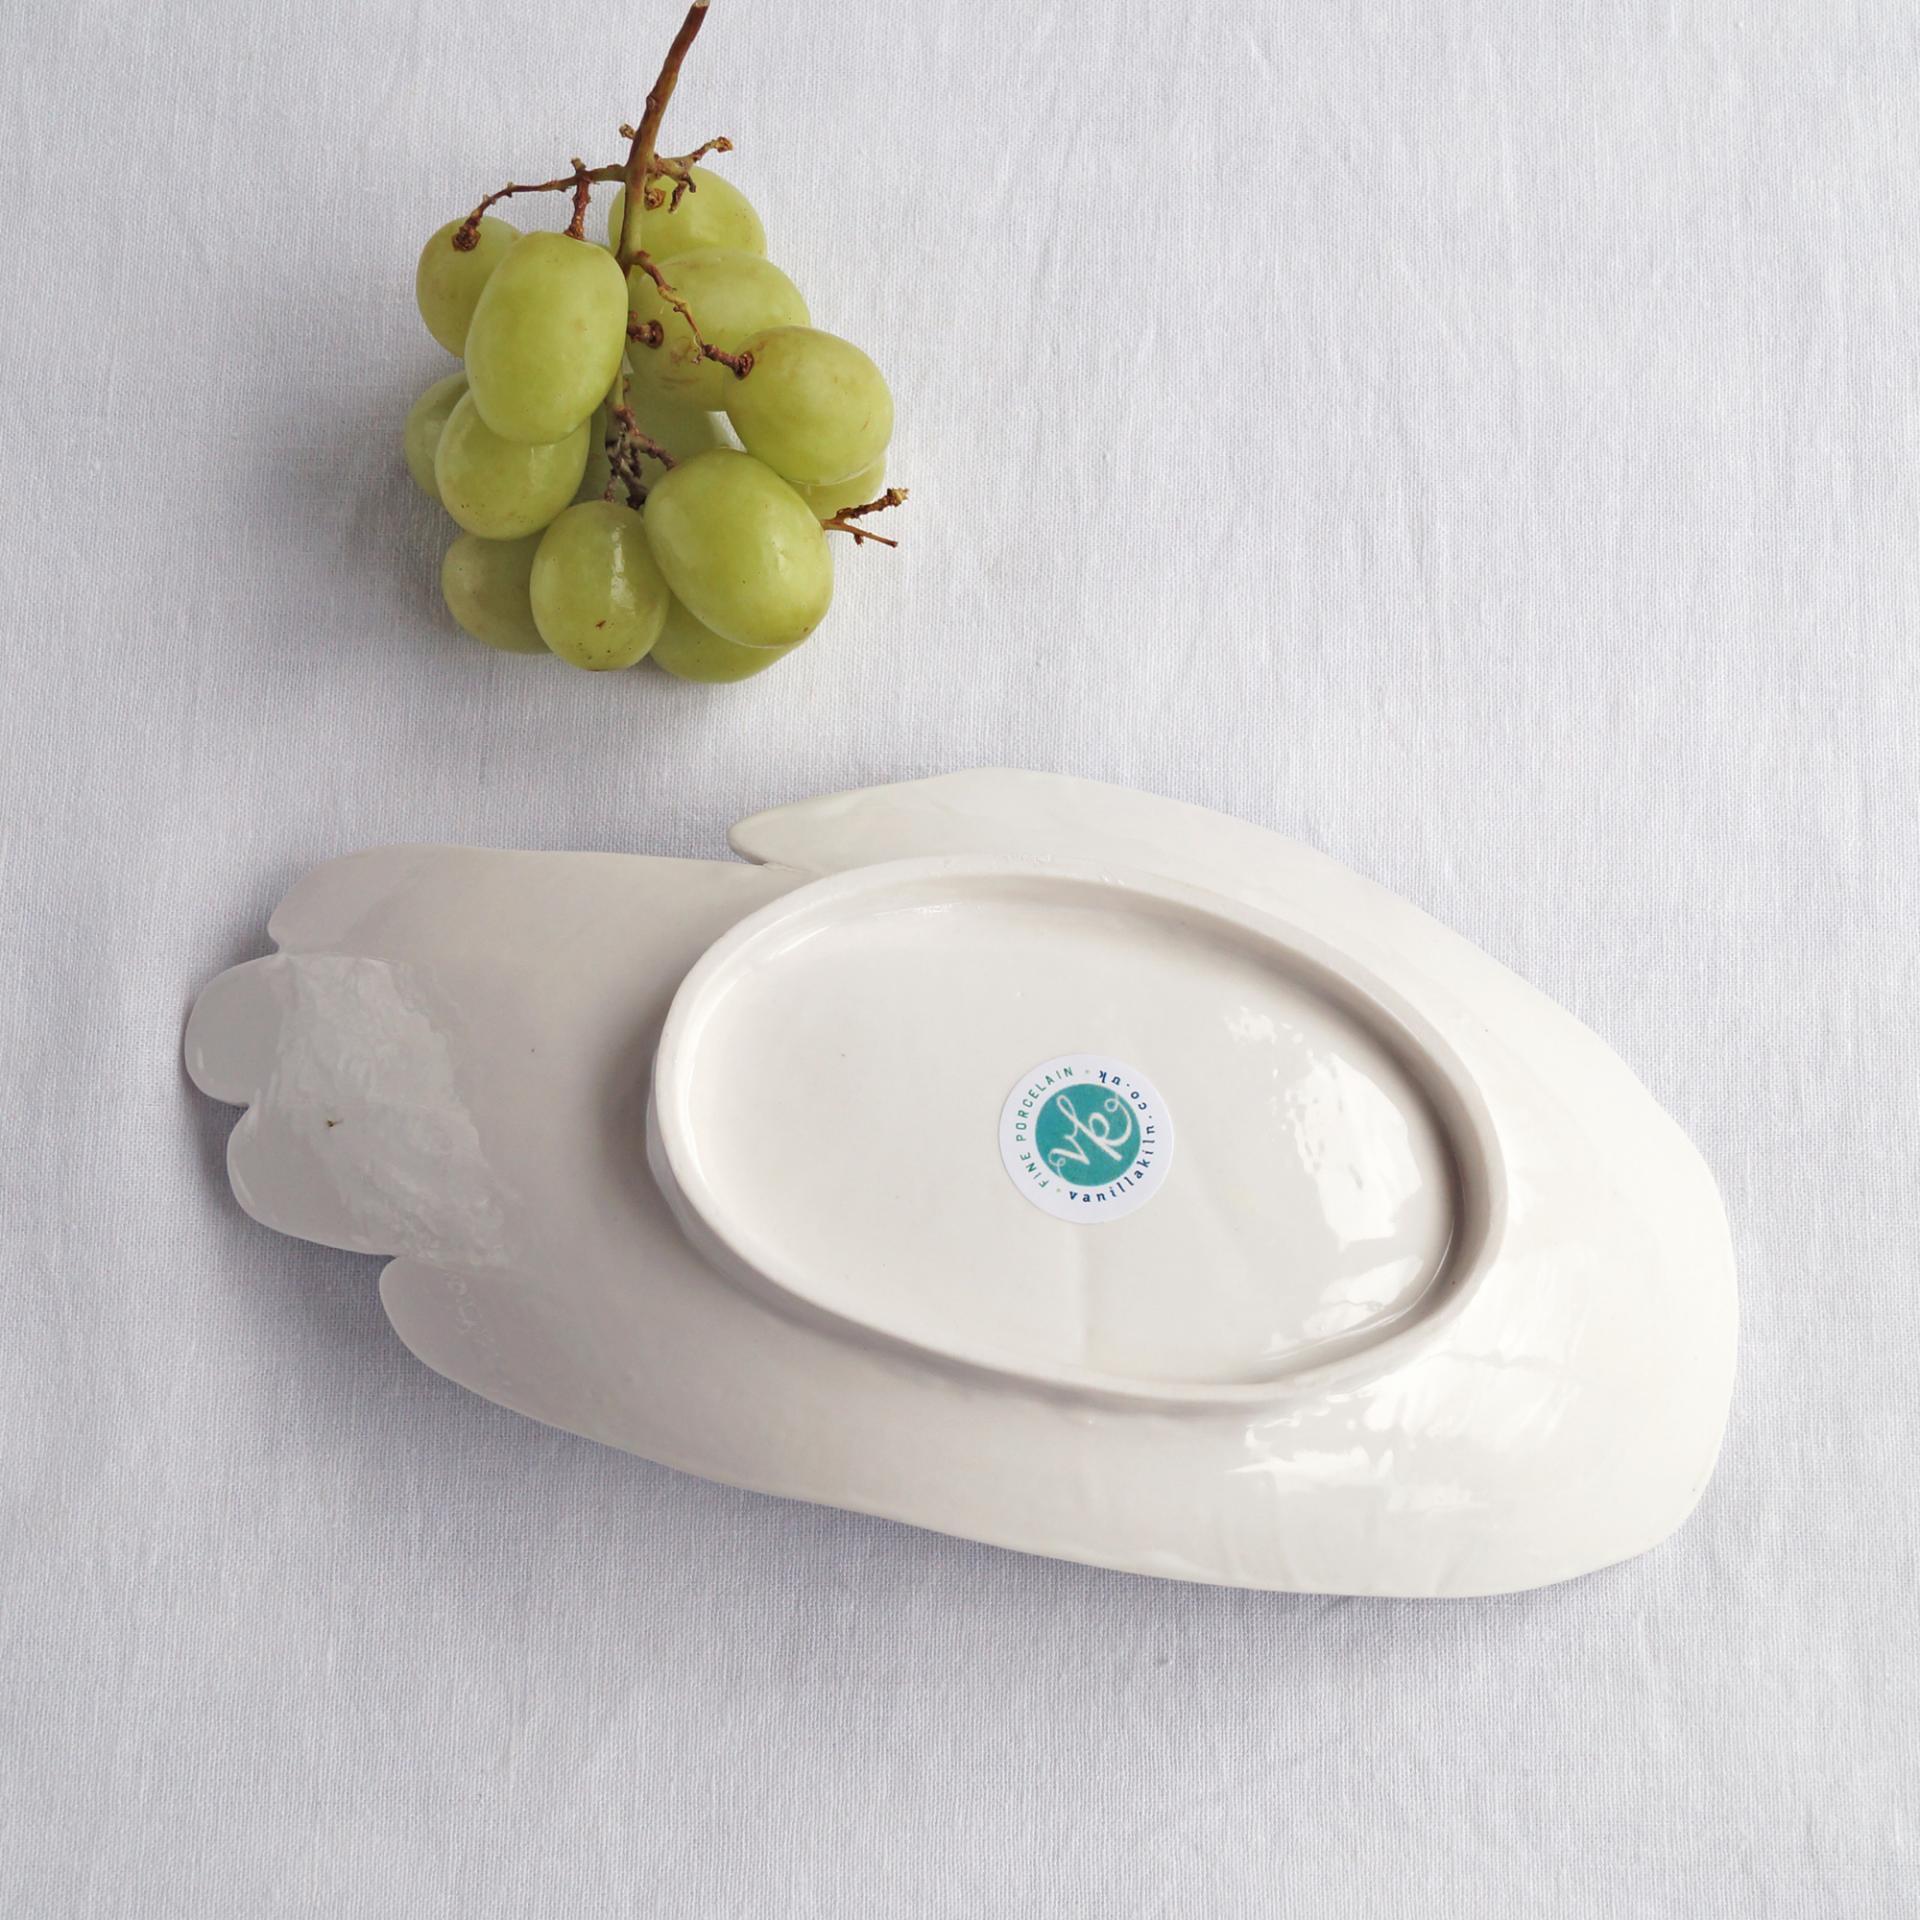 PALM, ceramic hand, crystal bowl, fruit bowl, white porcelain, grey blue, Vanillakiln, decorative bowl, UK, large hand, ceram